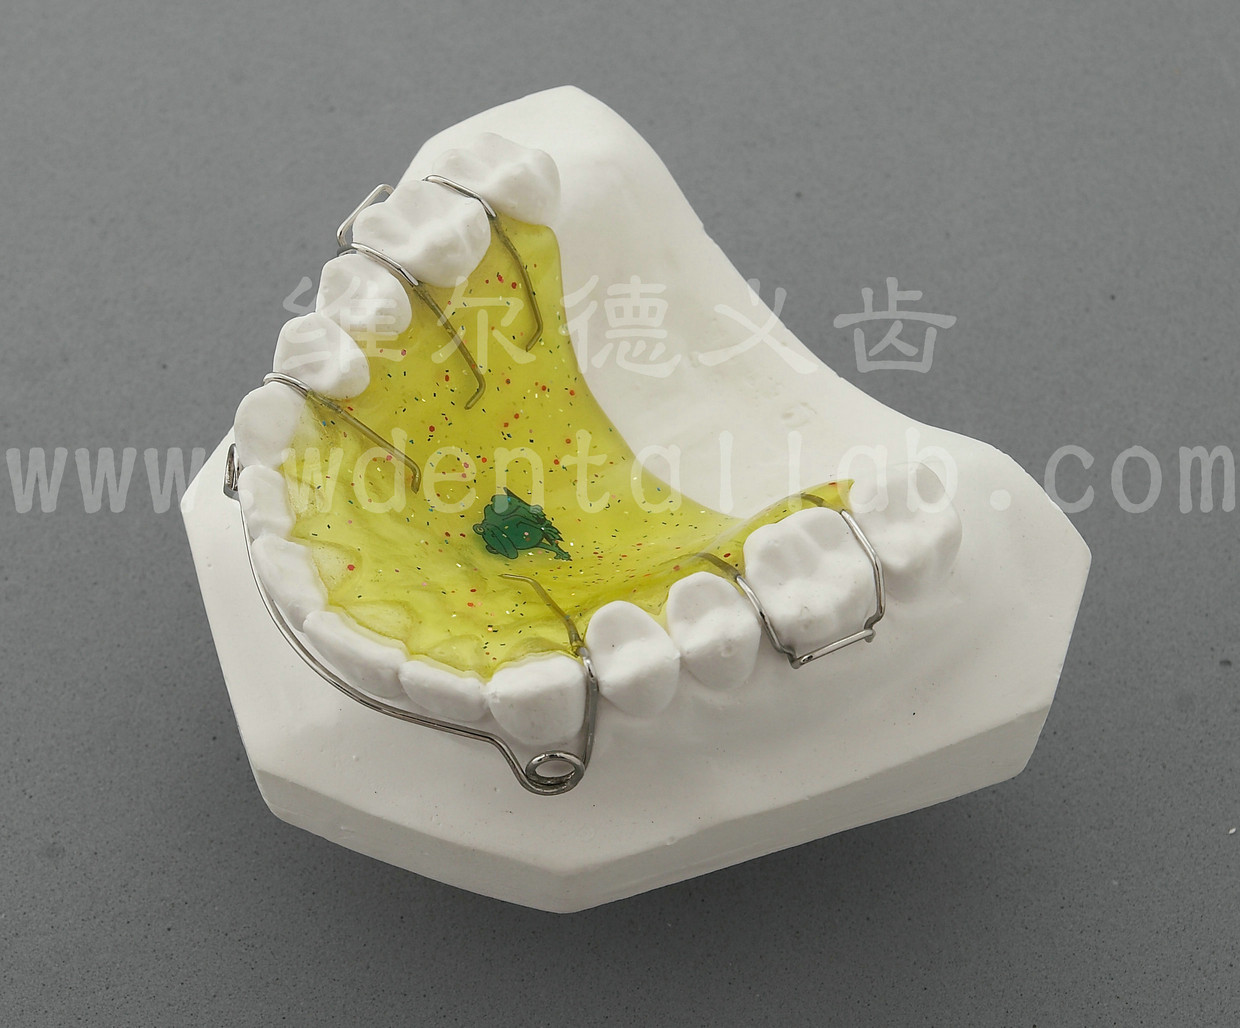 World Dental Laboratory Co.,Ltd, FDA Certified China Dental Lab, Full-service dental lab china, World Dental Laboratory, Digital Dental  Lab, China Outsourcing Dental Laboratory